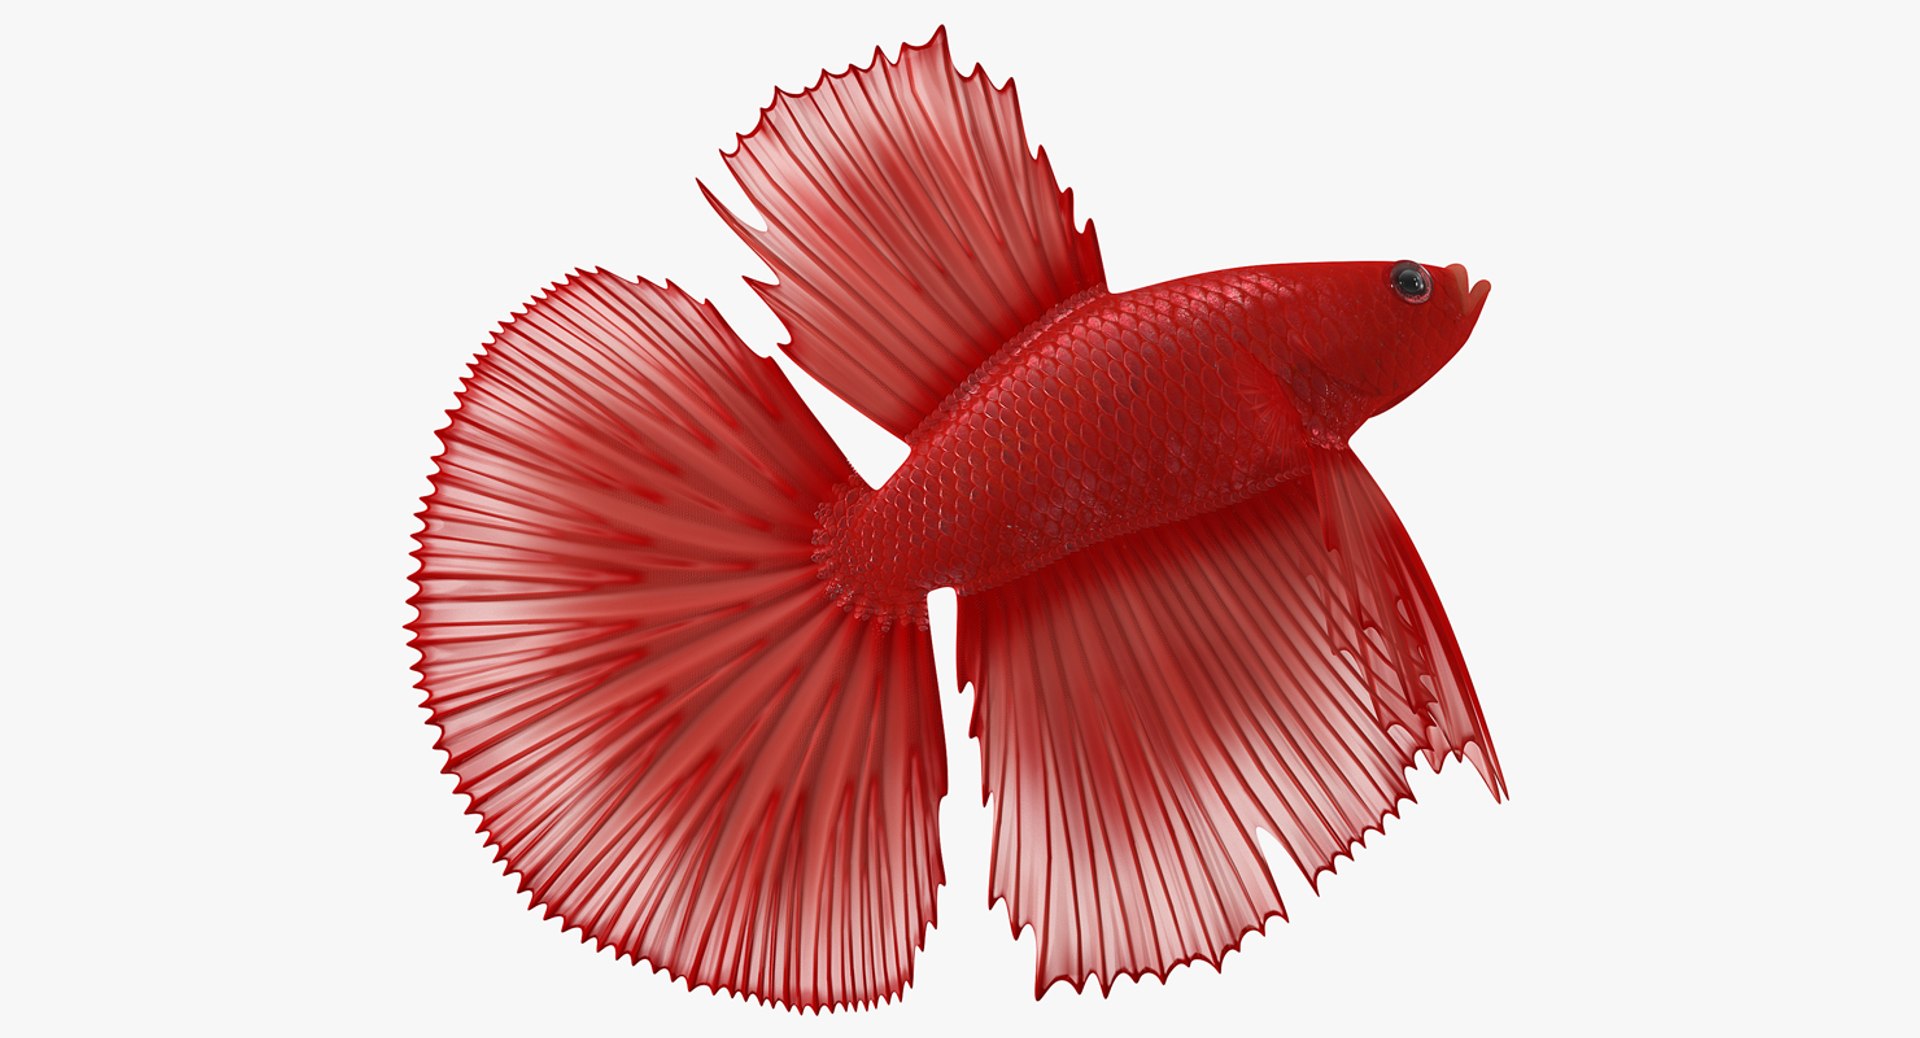 3D Model Red Crowntail Betta Fish - TurboSquid 1240836